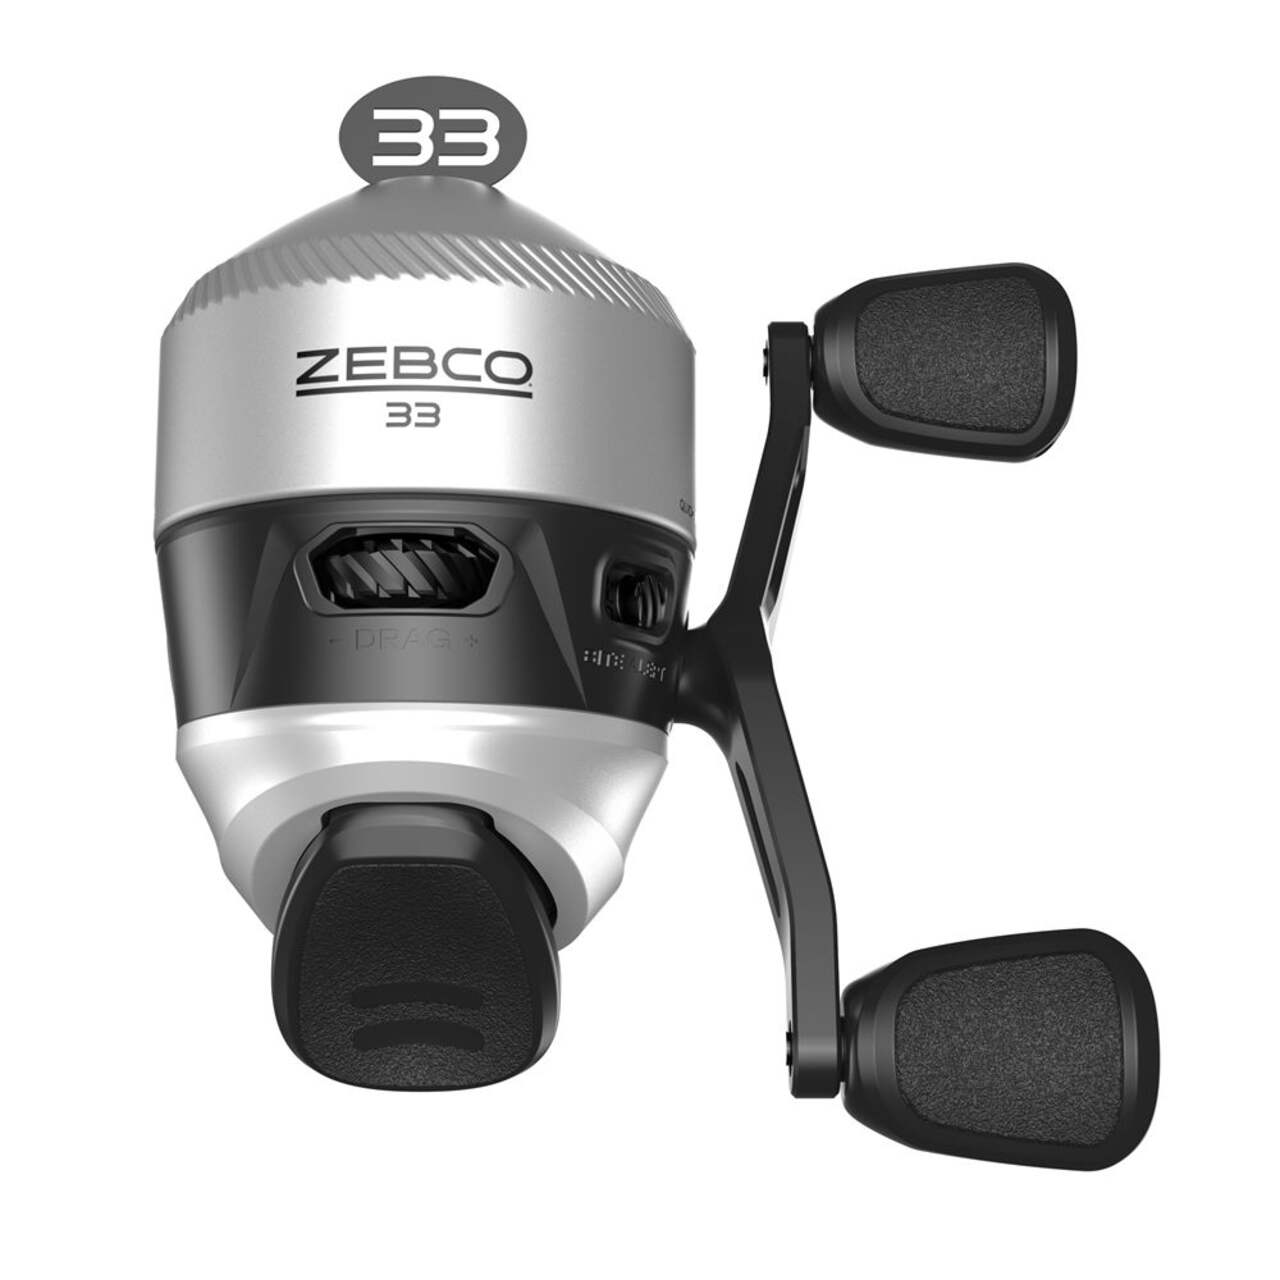 Zebco 33 Rhino Spincast Fishing Reel Zr33k Cka5 for sale online